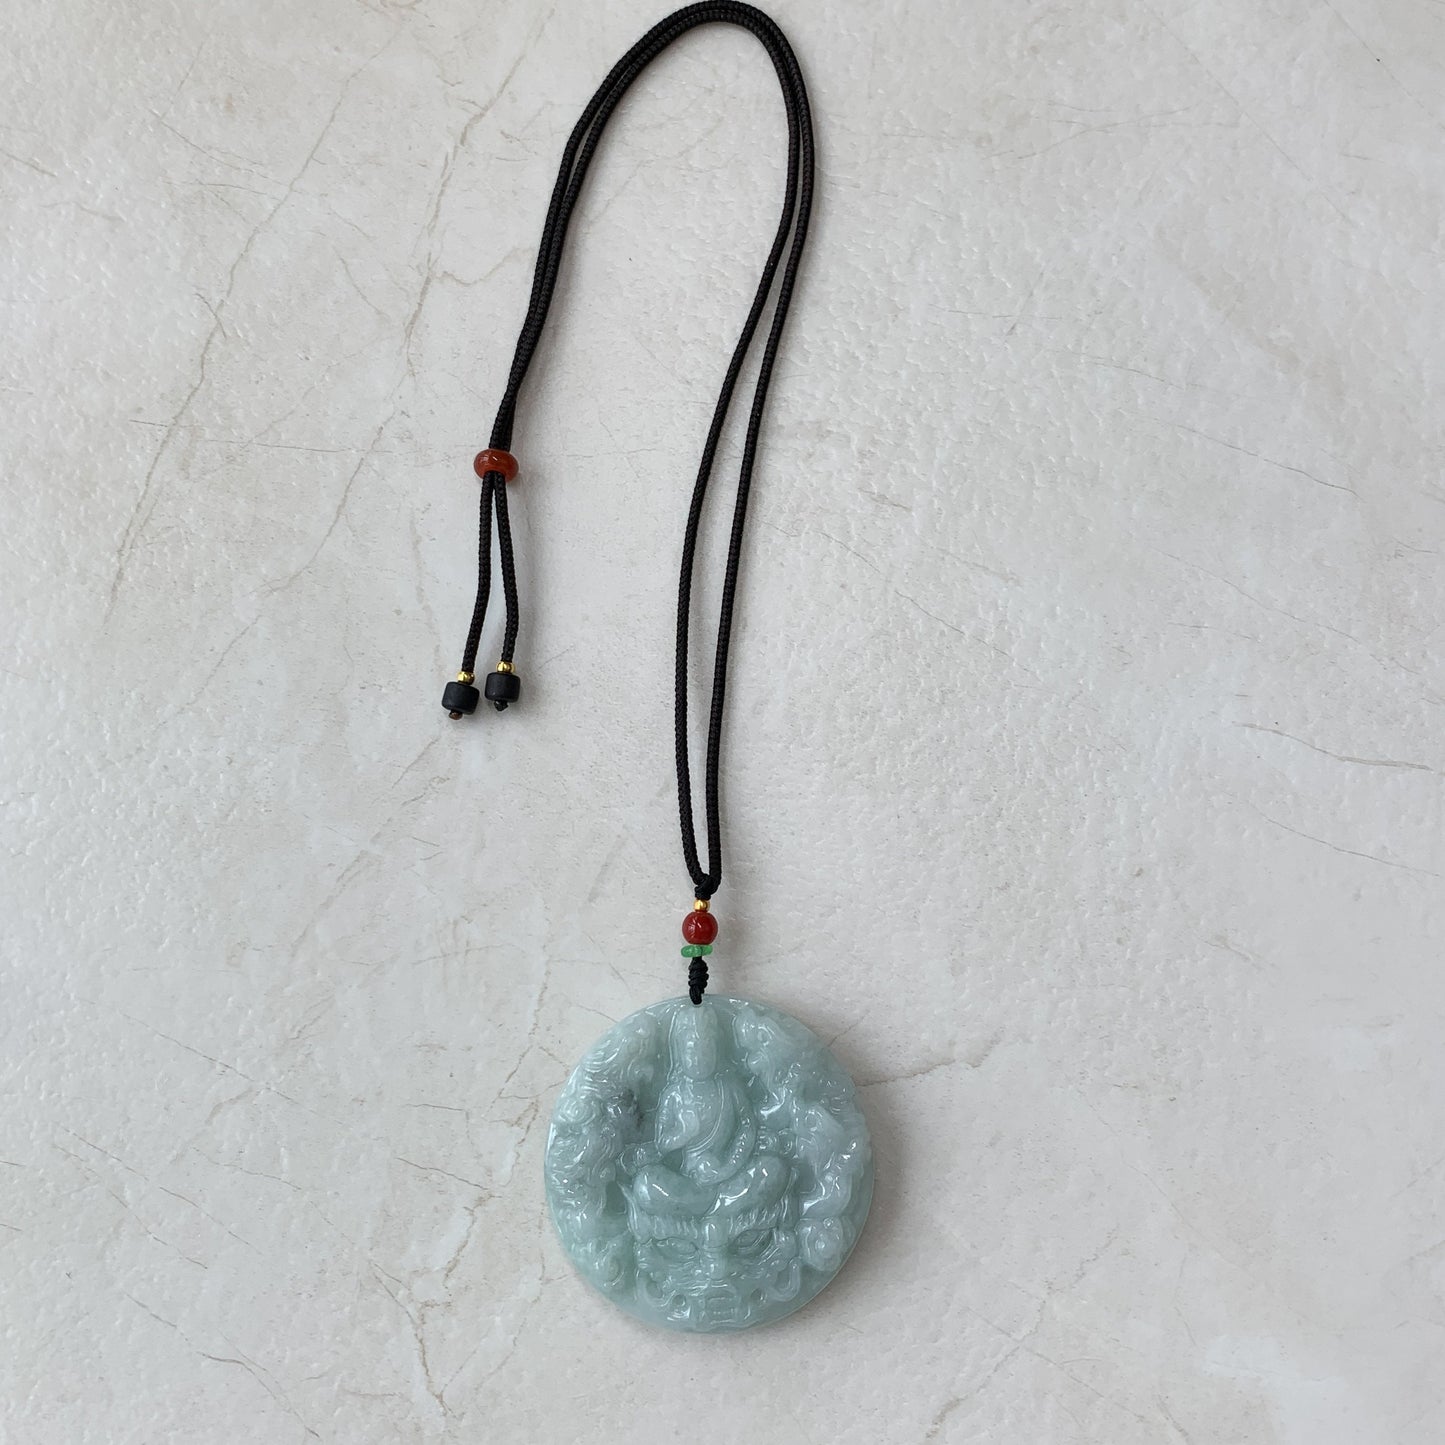 Jadeite Jade Guan Yin Kwan Yin Protected by Dragon Avalokitesvara Semi-Translucent Carved Pendant Necklace, YJ-0321-0361717 - AriaDesignCollection